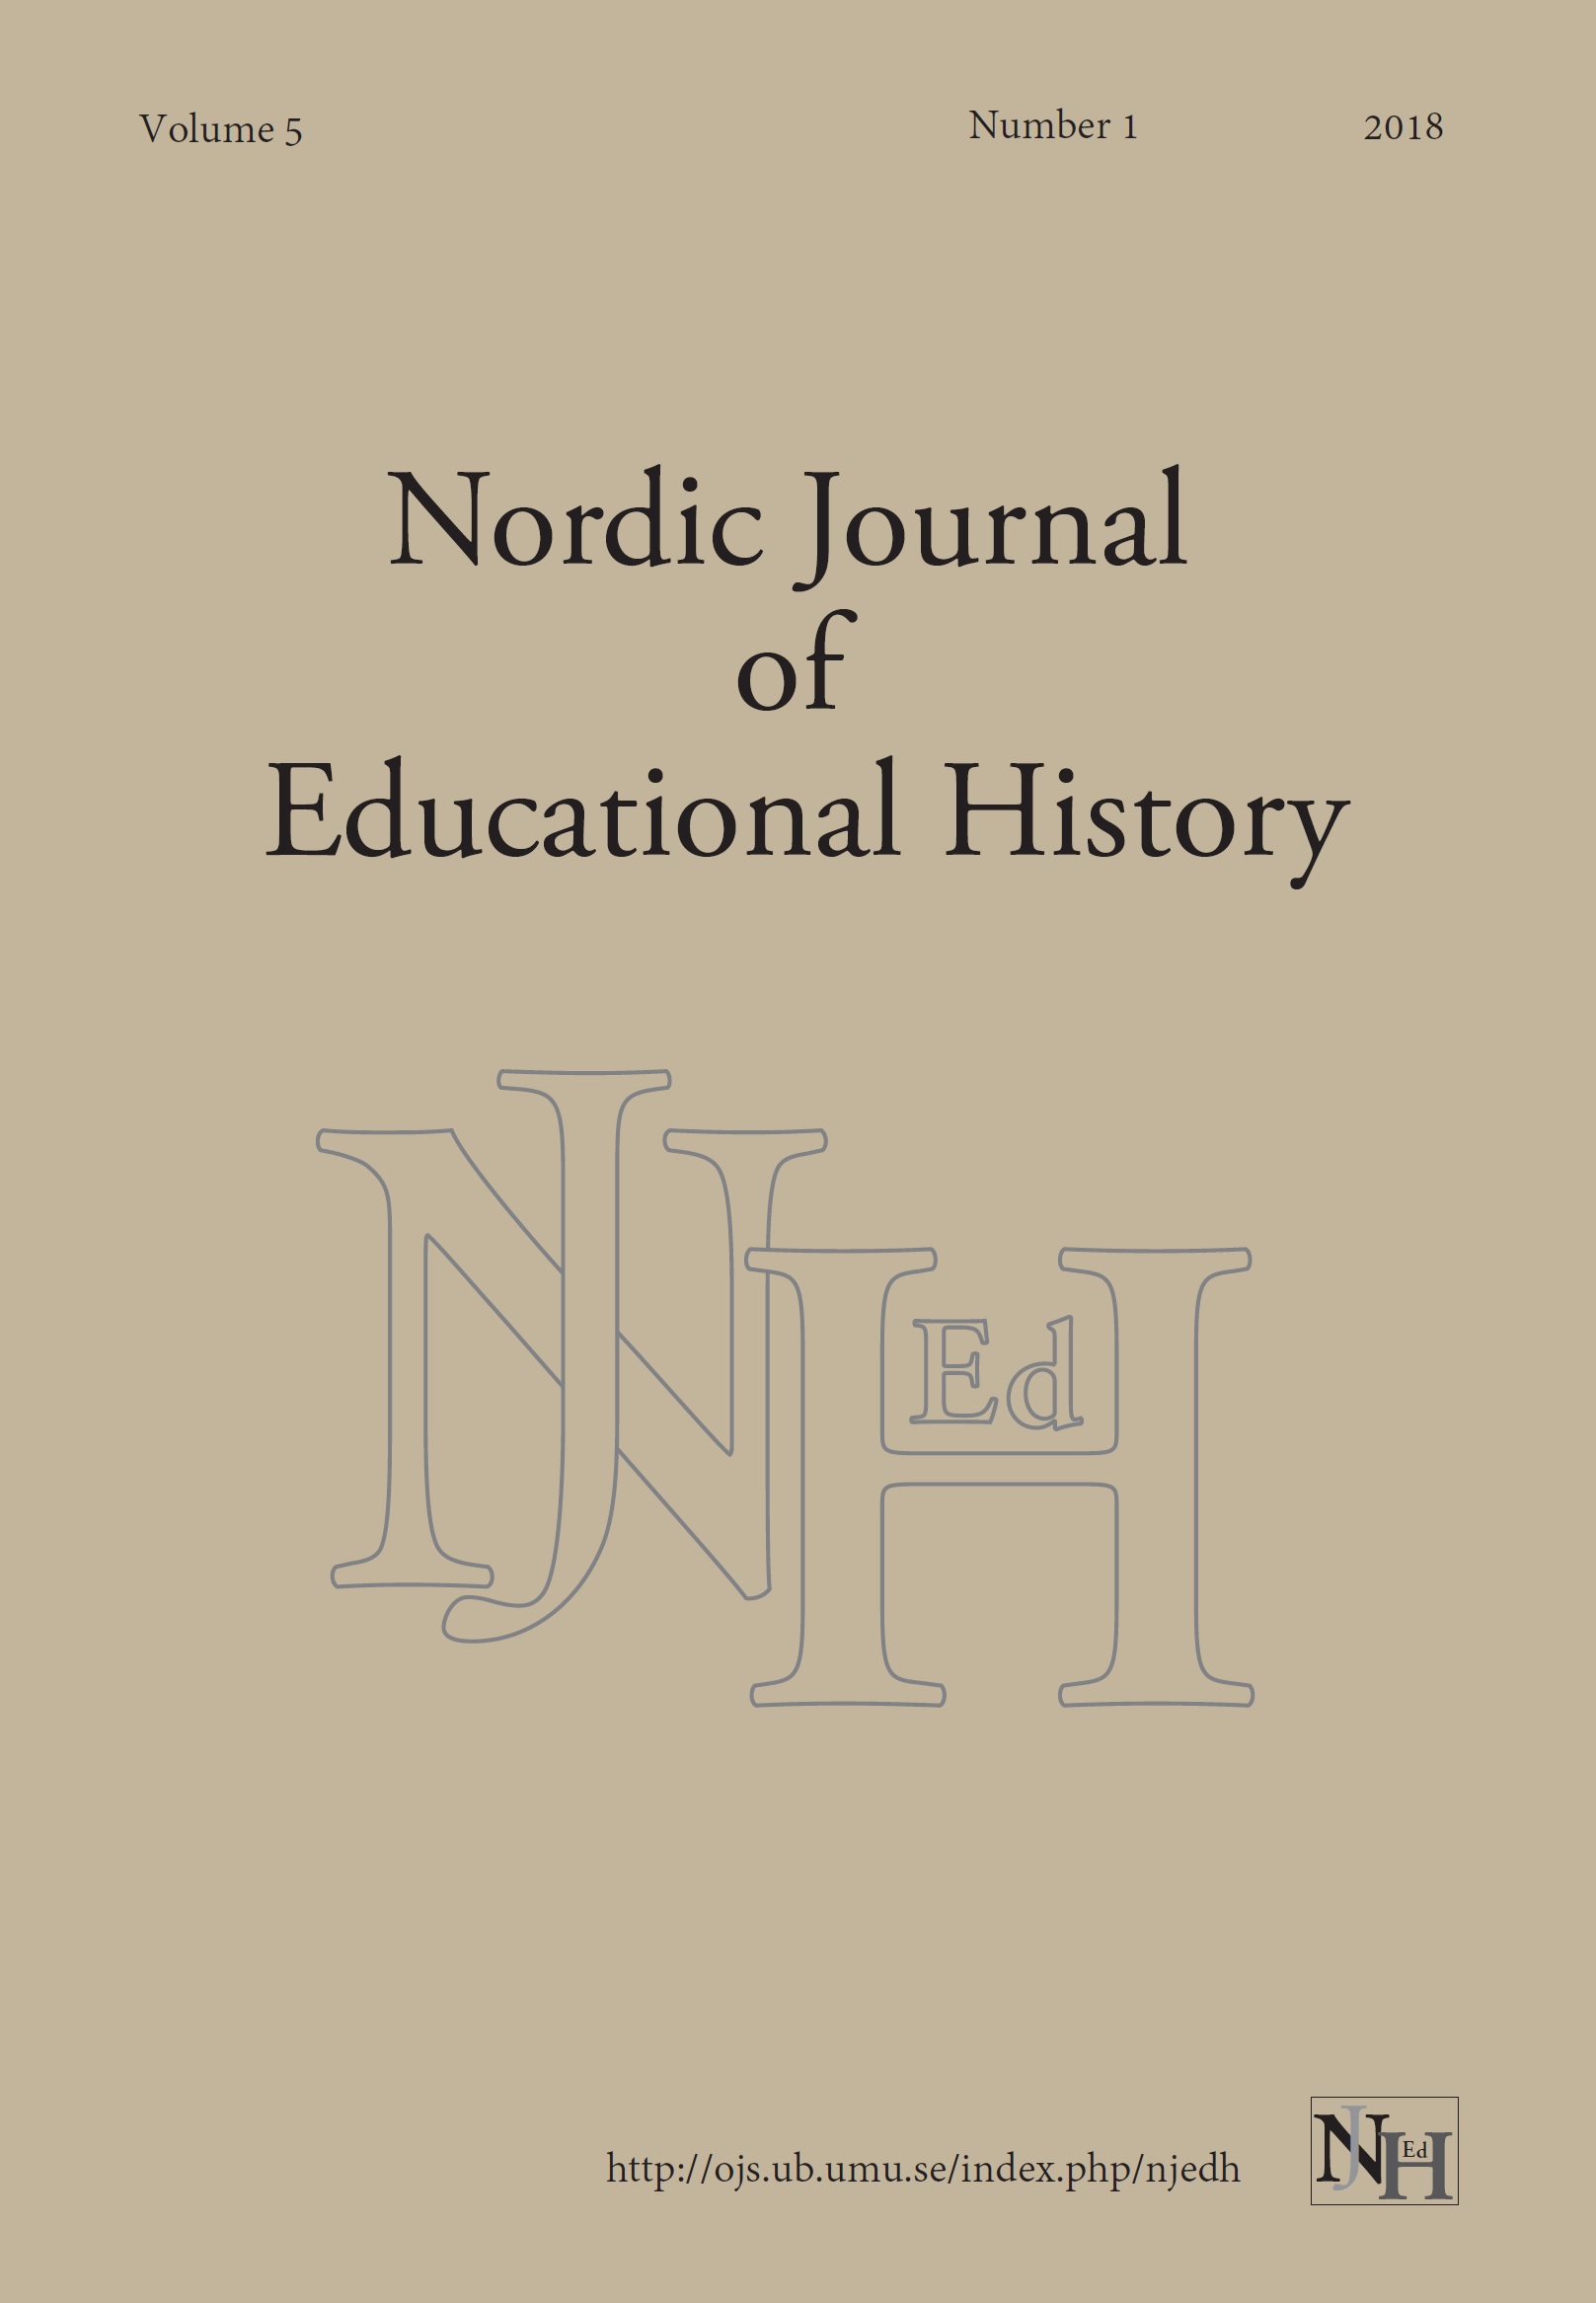 Noridc Journal of Educational History.jpg